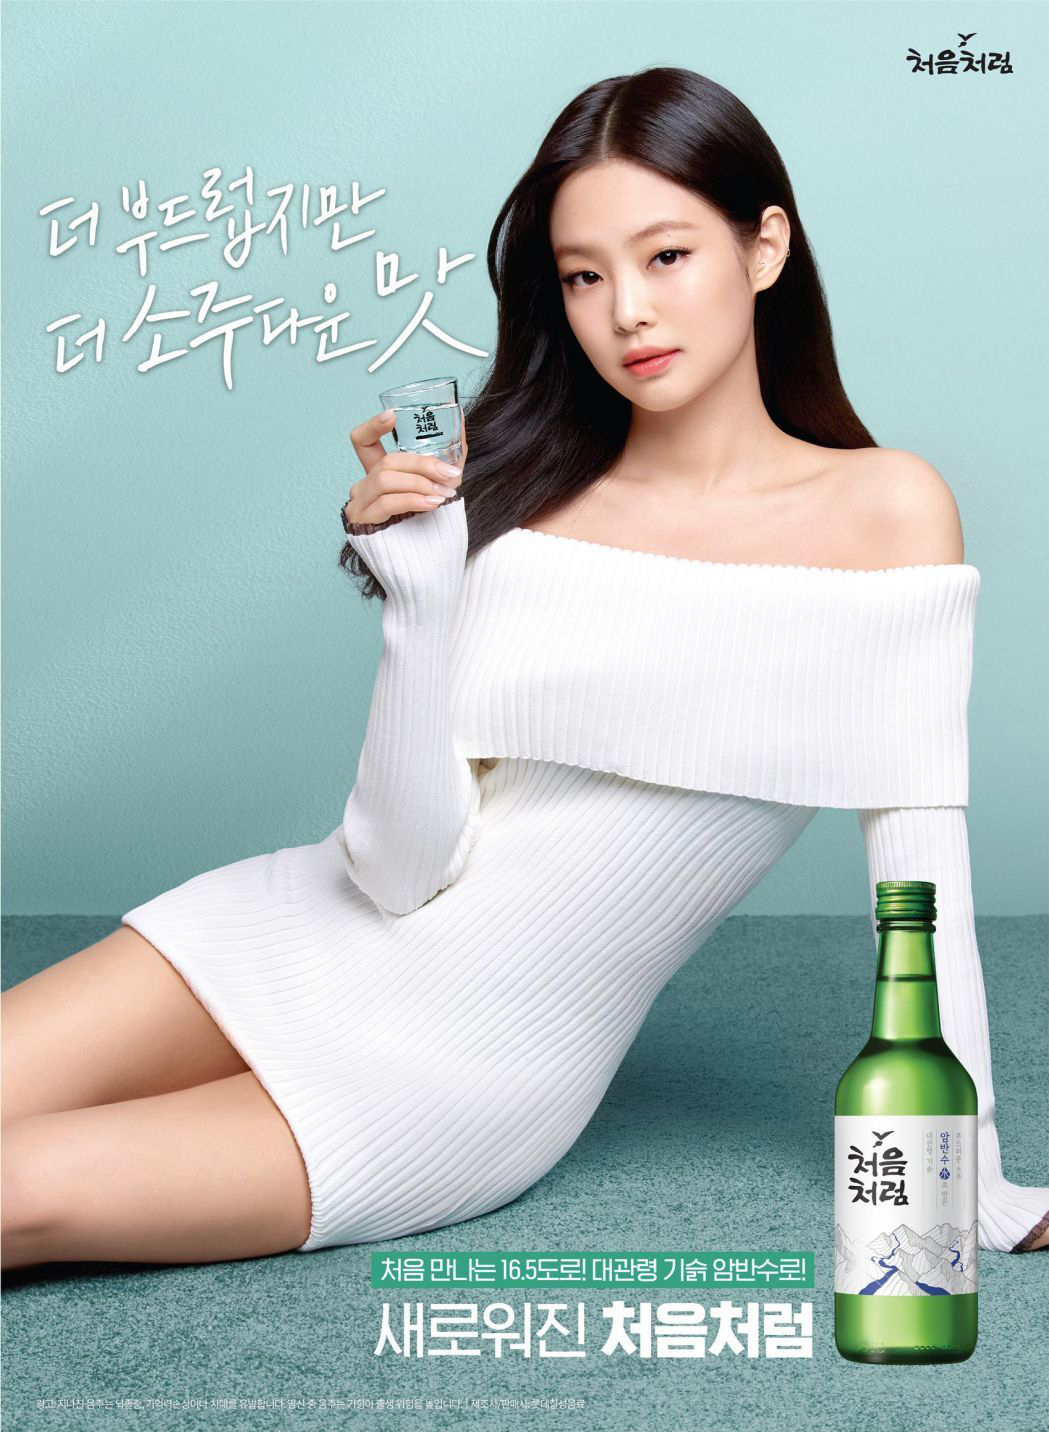 blackpink-jennie-becomes-new-advertising-model-for-lotte-soju-chum-churum